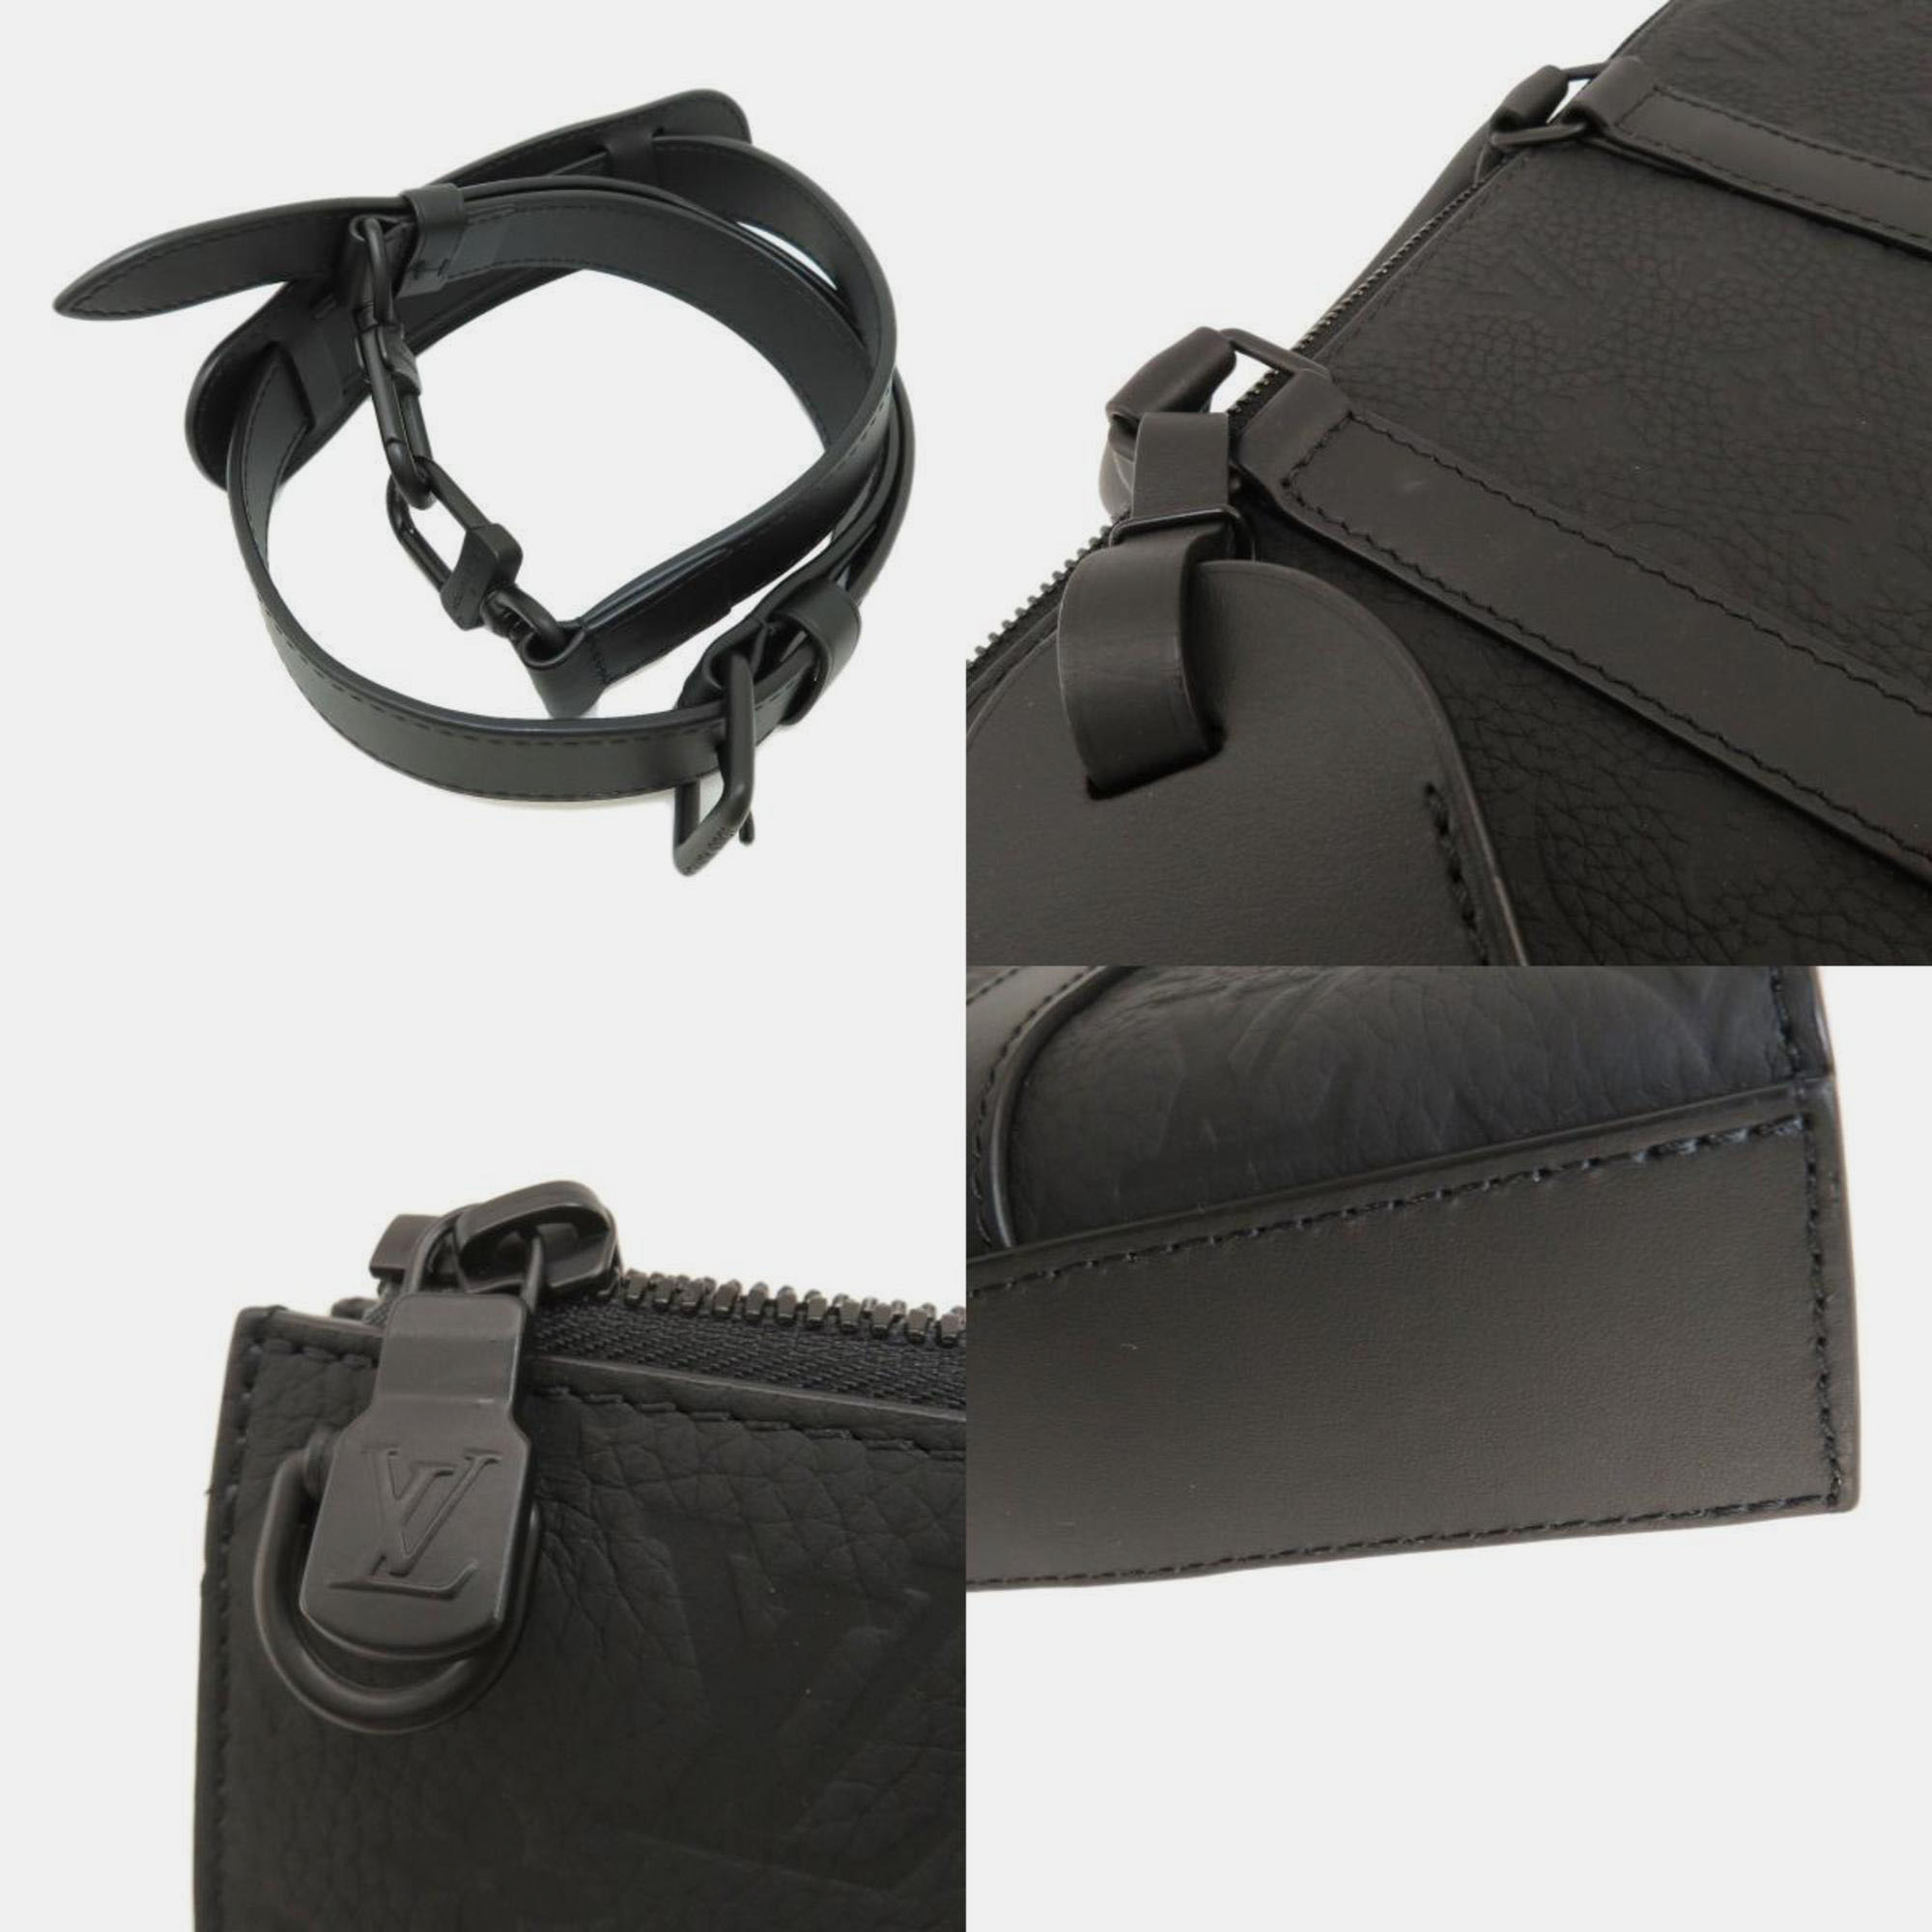 Louis Vuitton Black Taurillon Leather Sac Plat Tote Bag